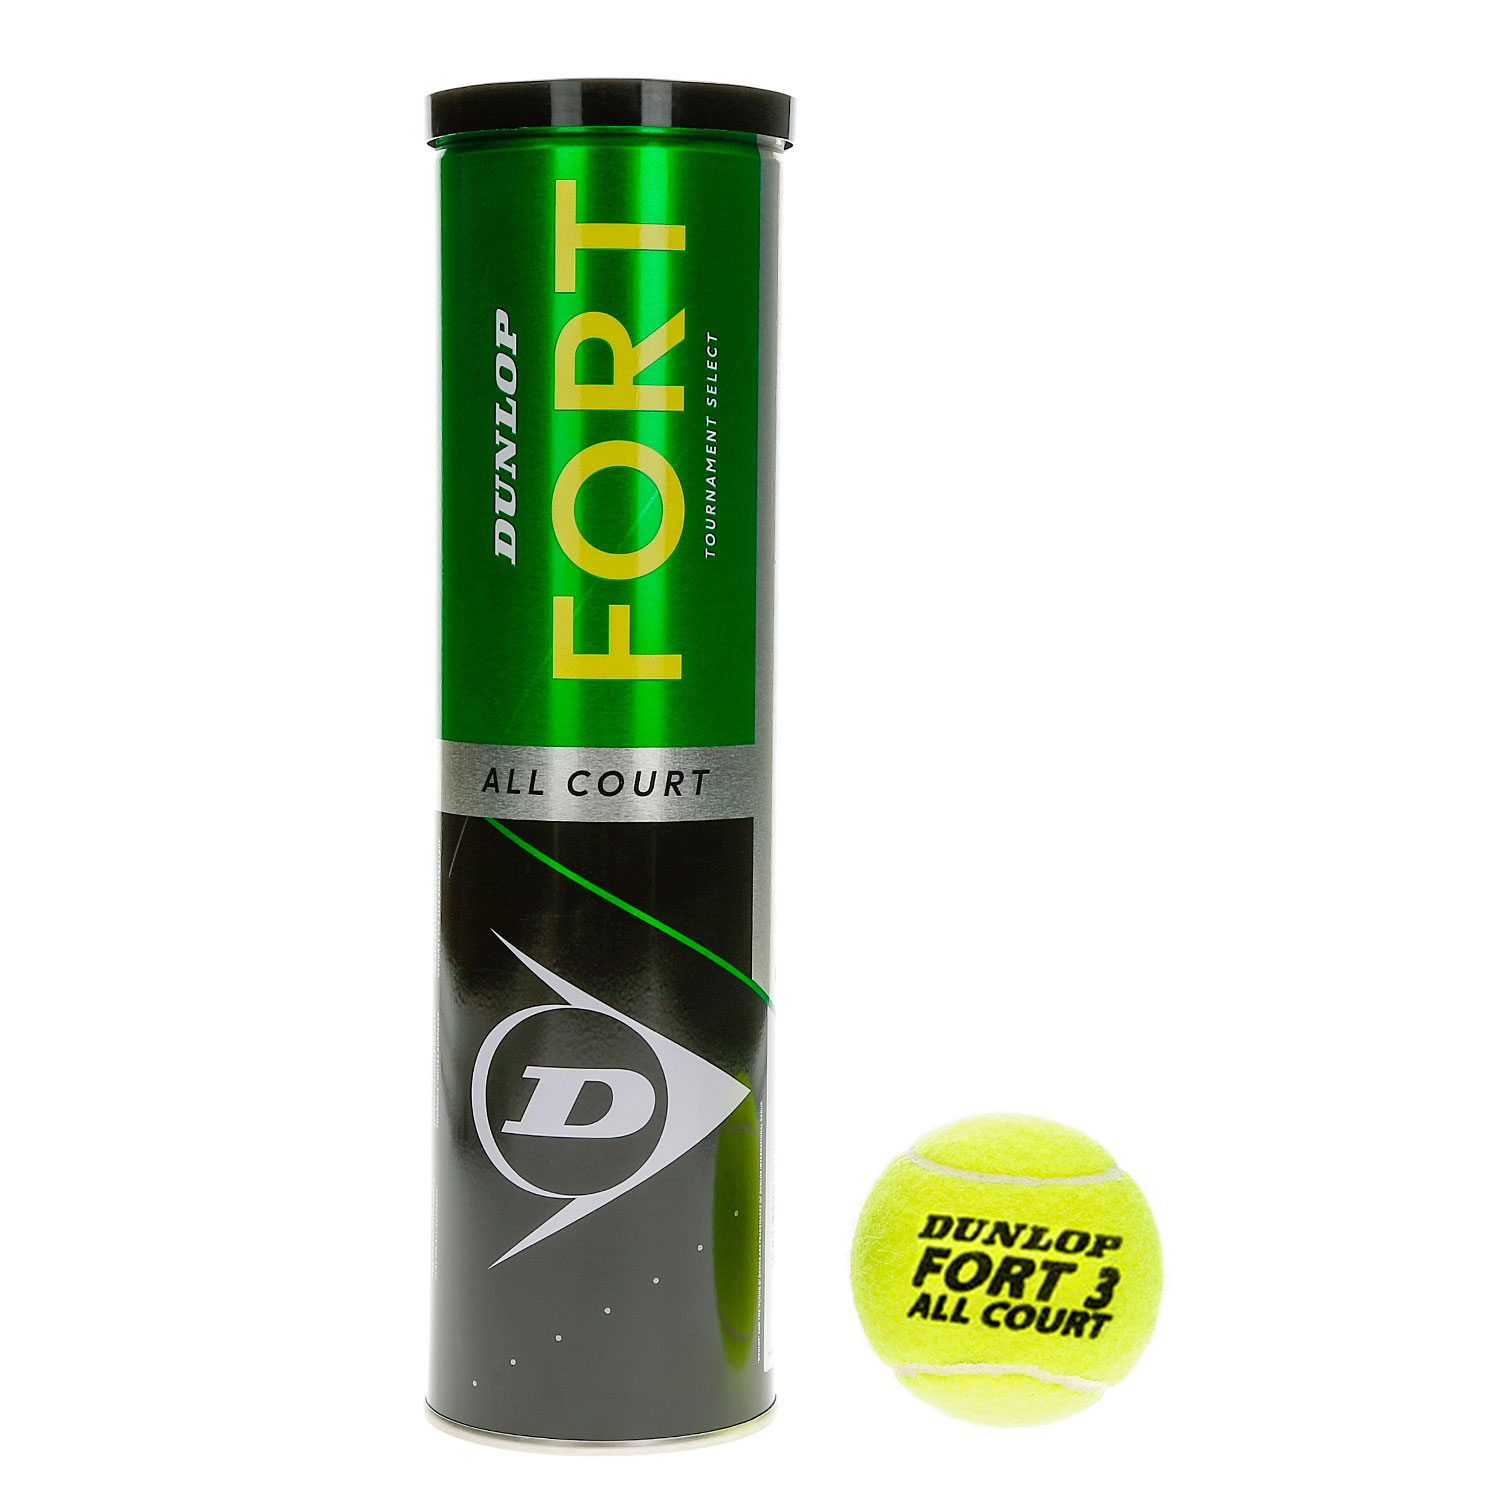 Dunlop Fort All Court Tournament Select - 4 Ball Can